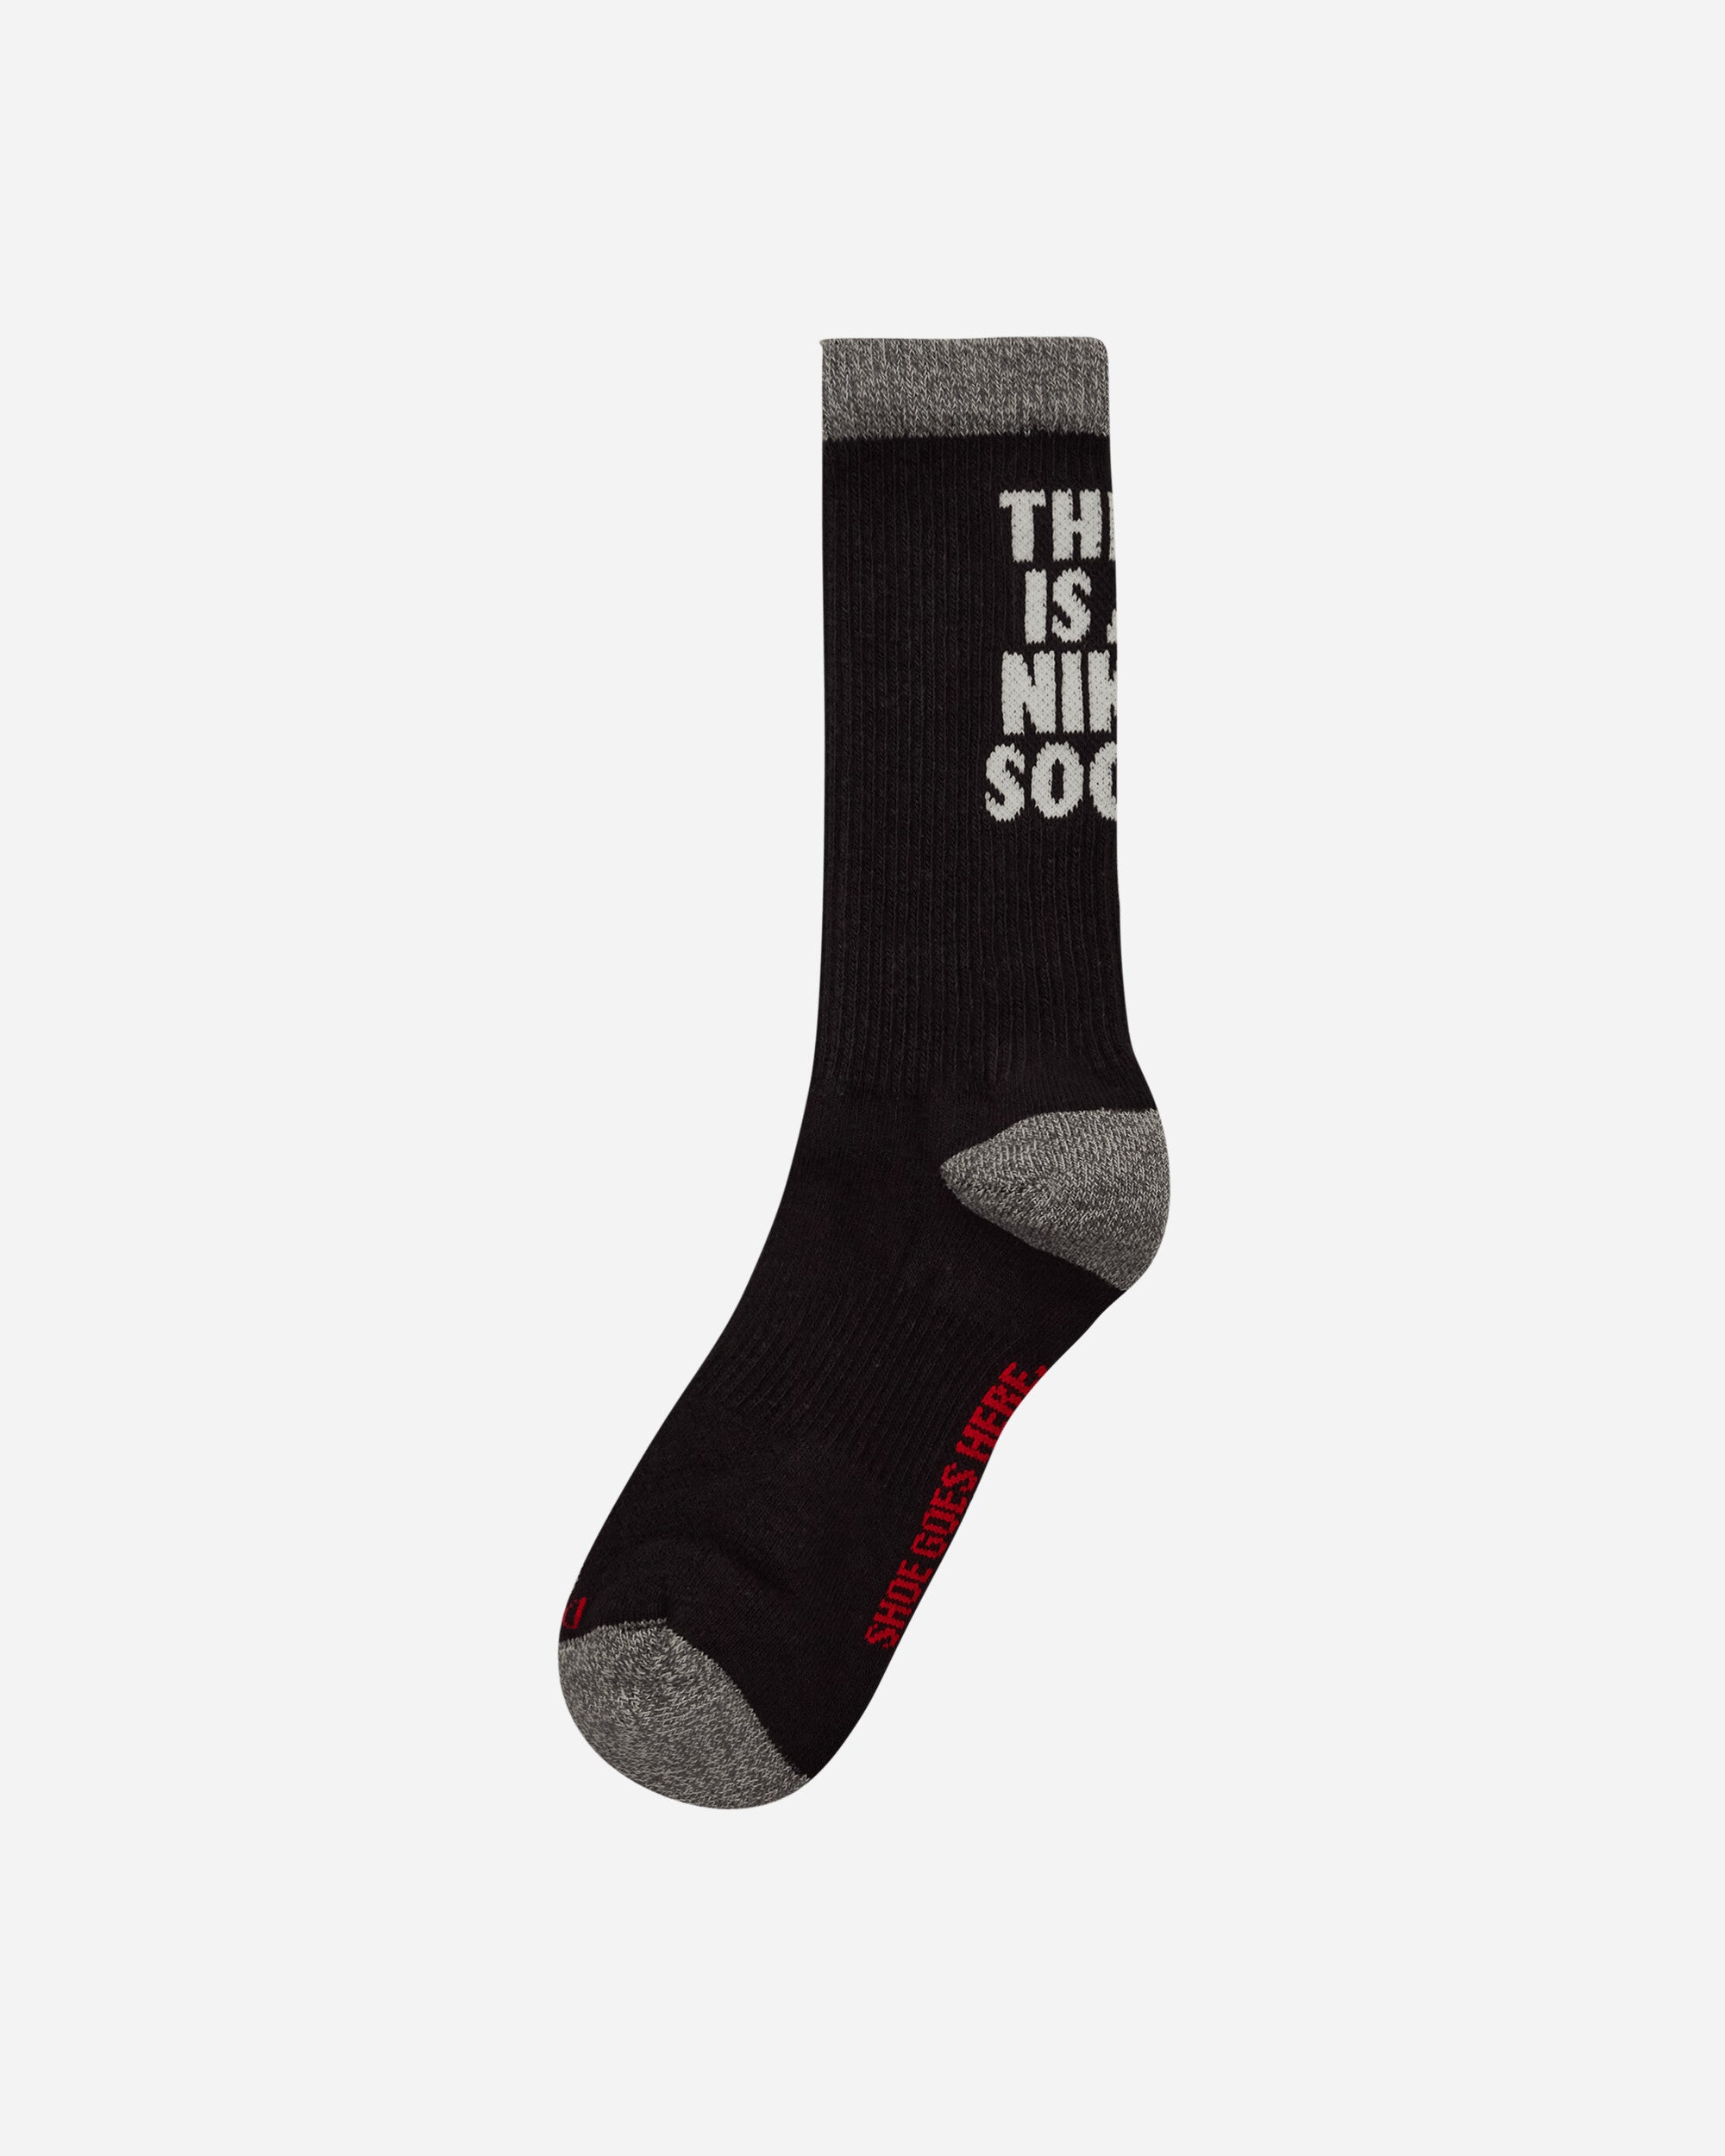 Nike Ed Pls Csh Crw 1P 144 Cky Black/University Red Underwear Socks FB3272-010